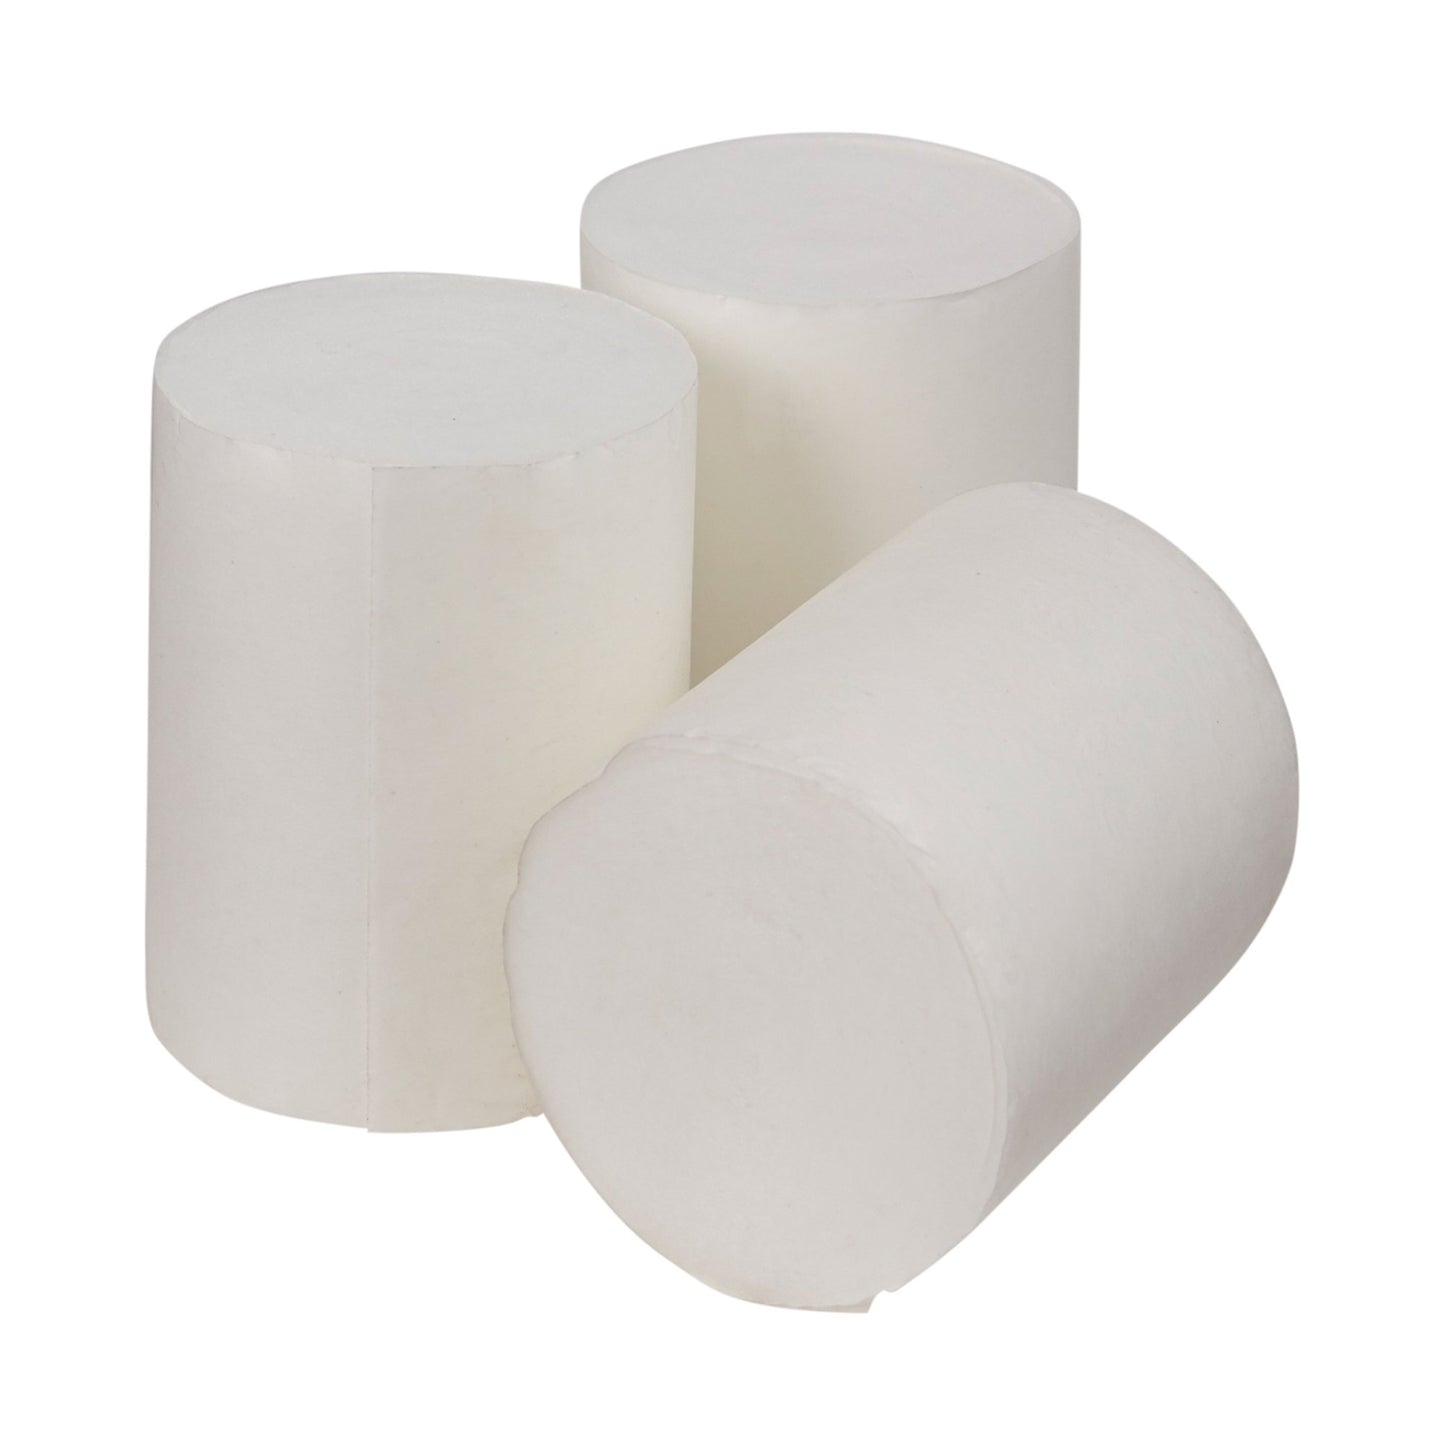 3M™ White Polyester Undercast Cast Padding, 3 Inch x 4 Yard